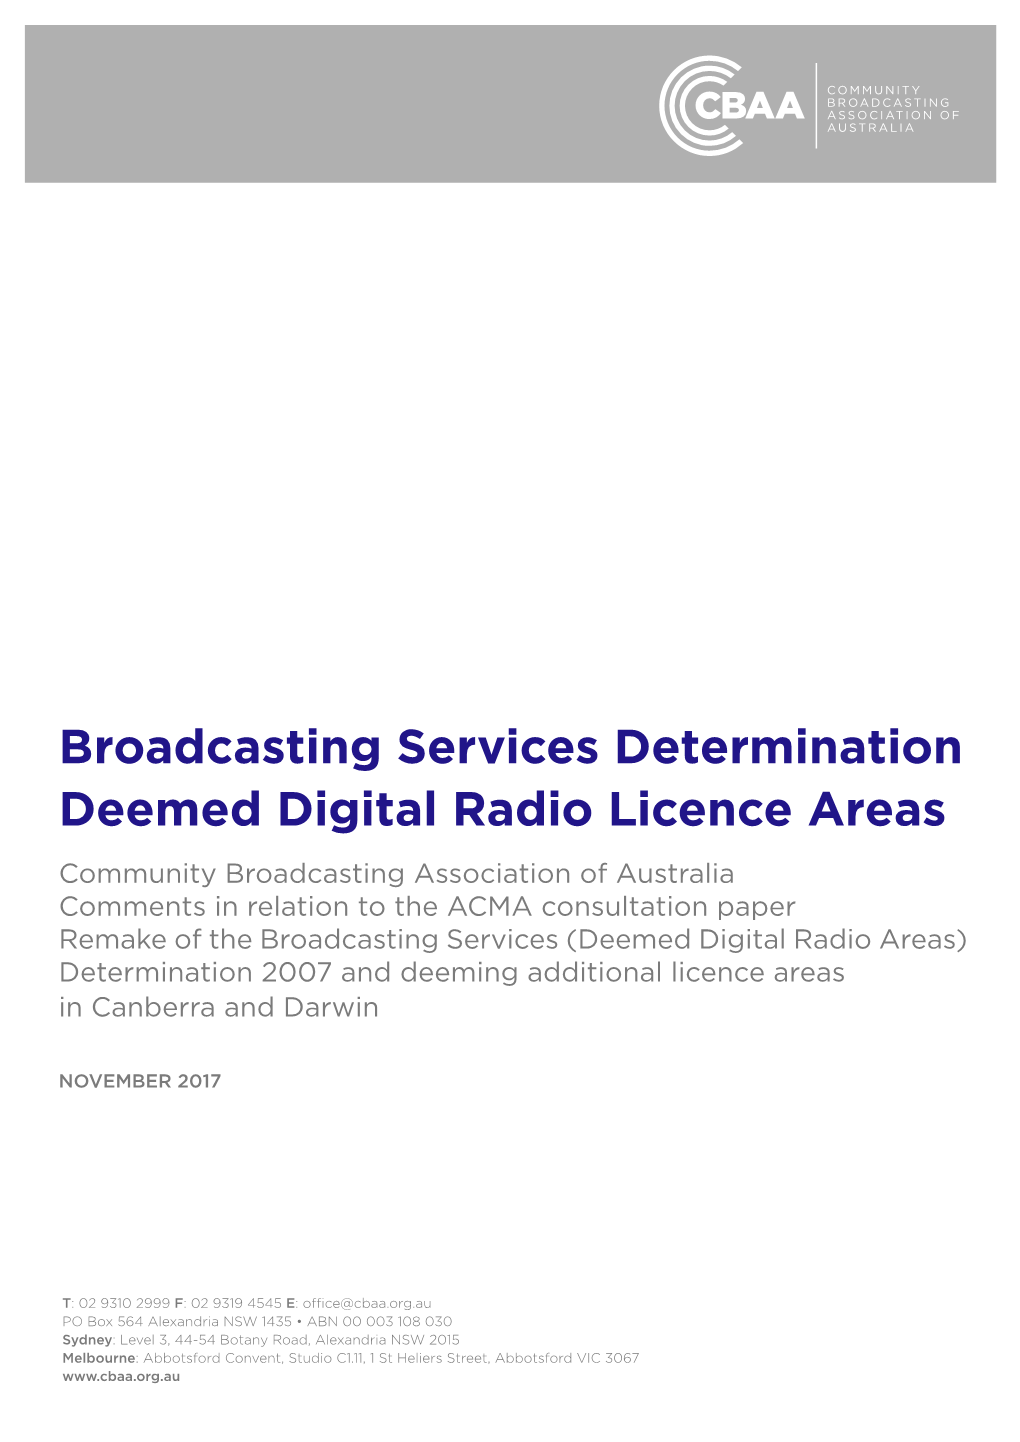 CBAA Submission ACMA Digital Radio Deeming-November 2017.Pdf